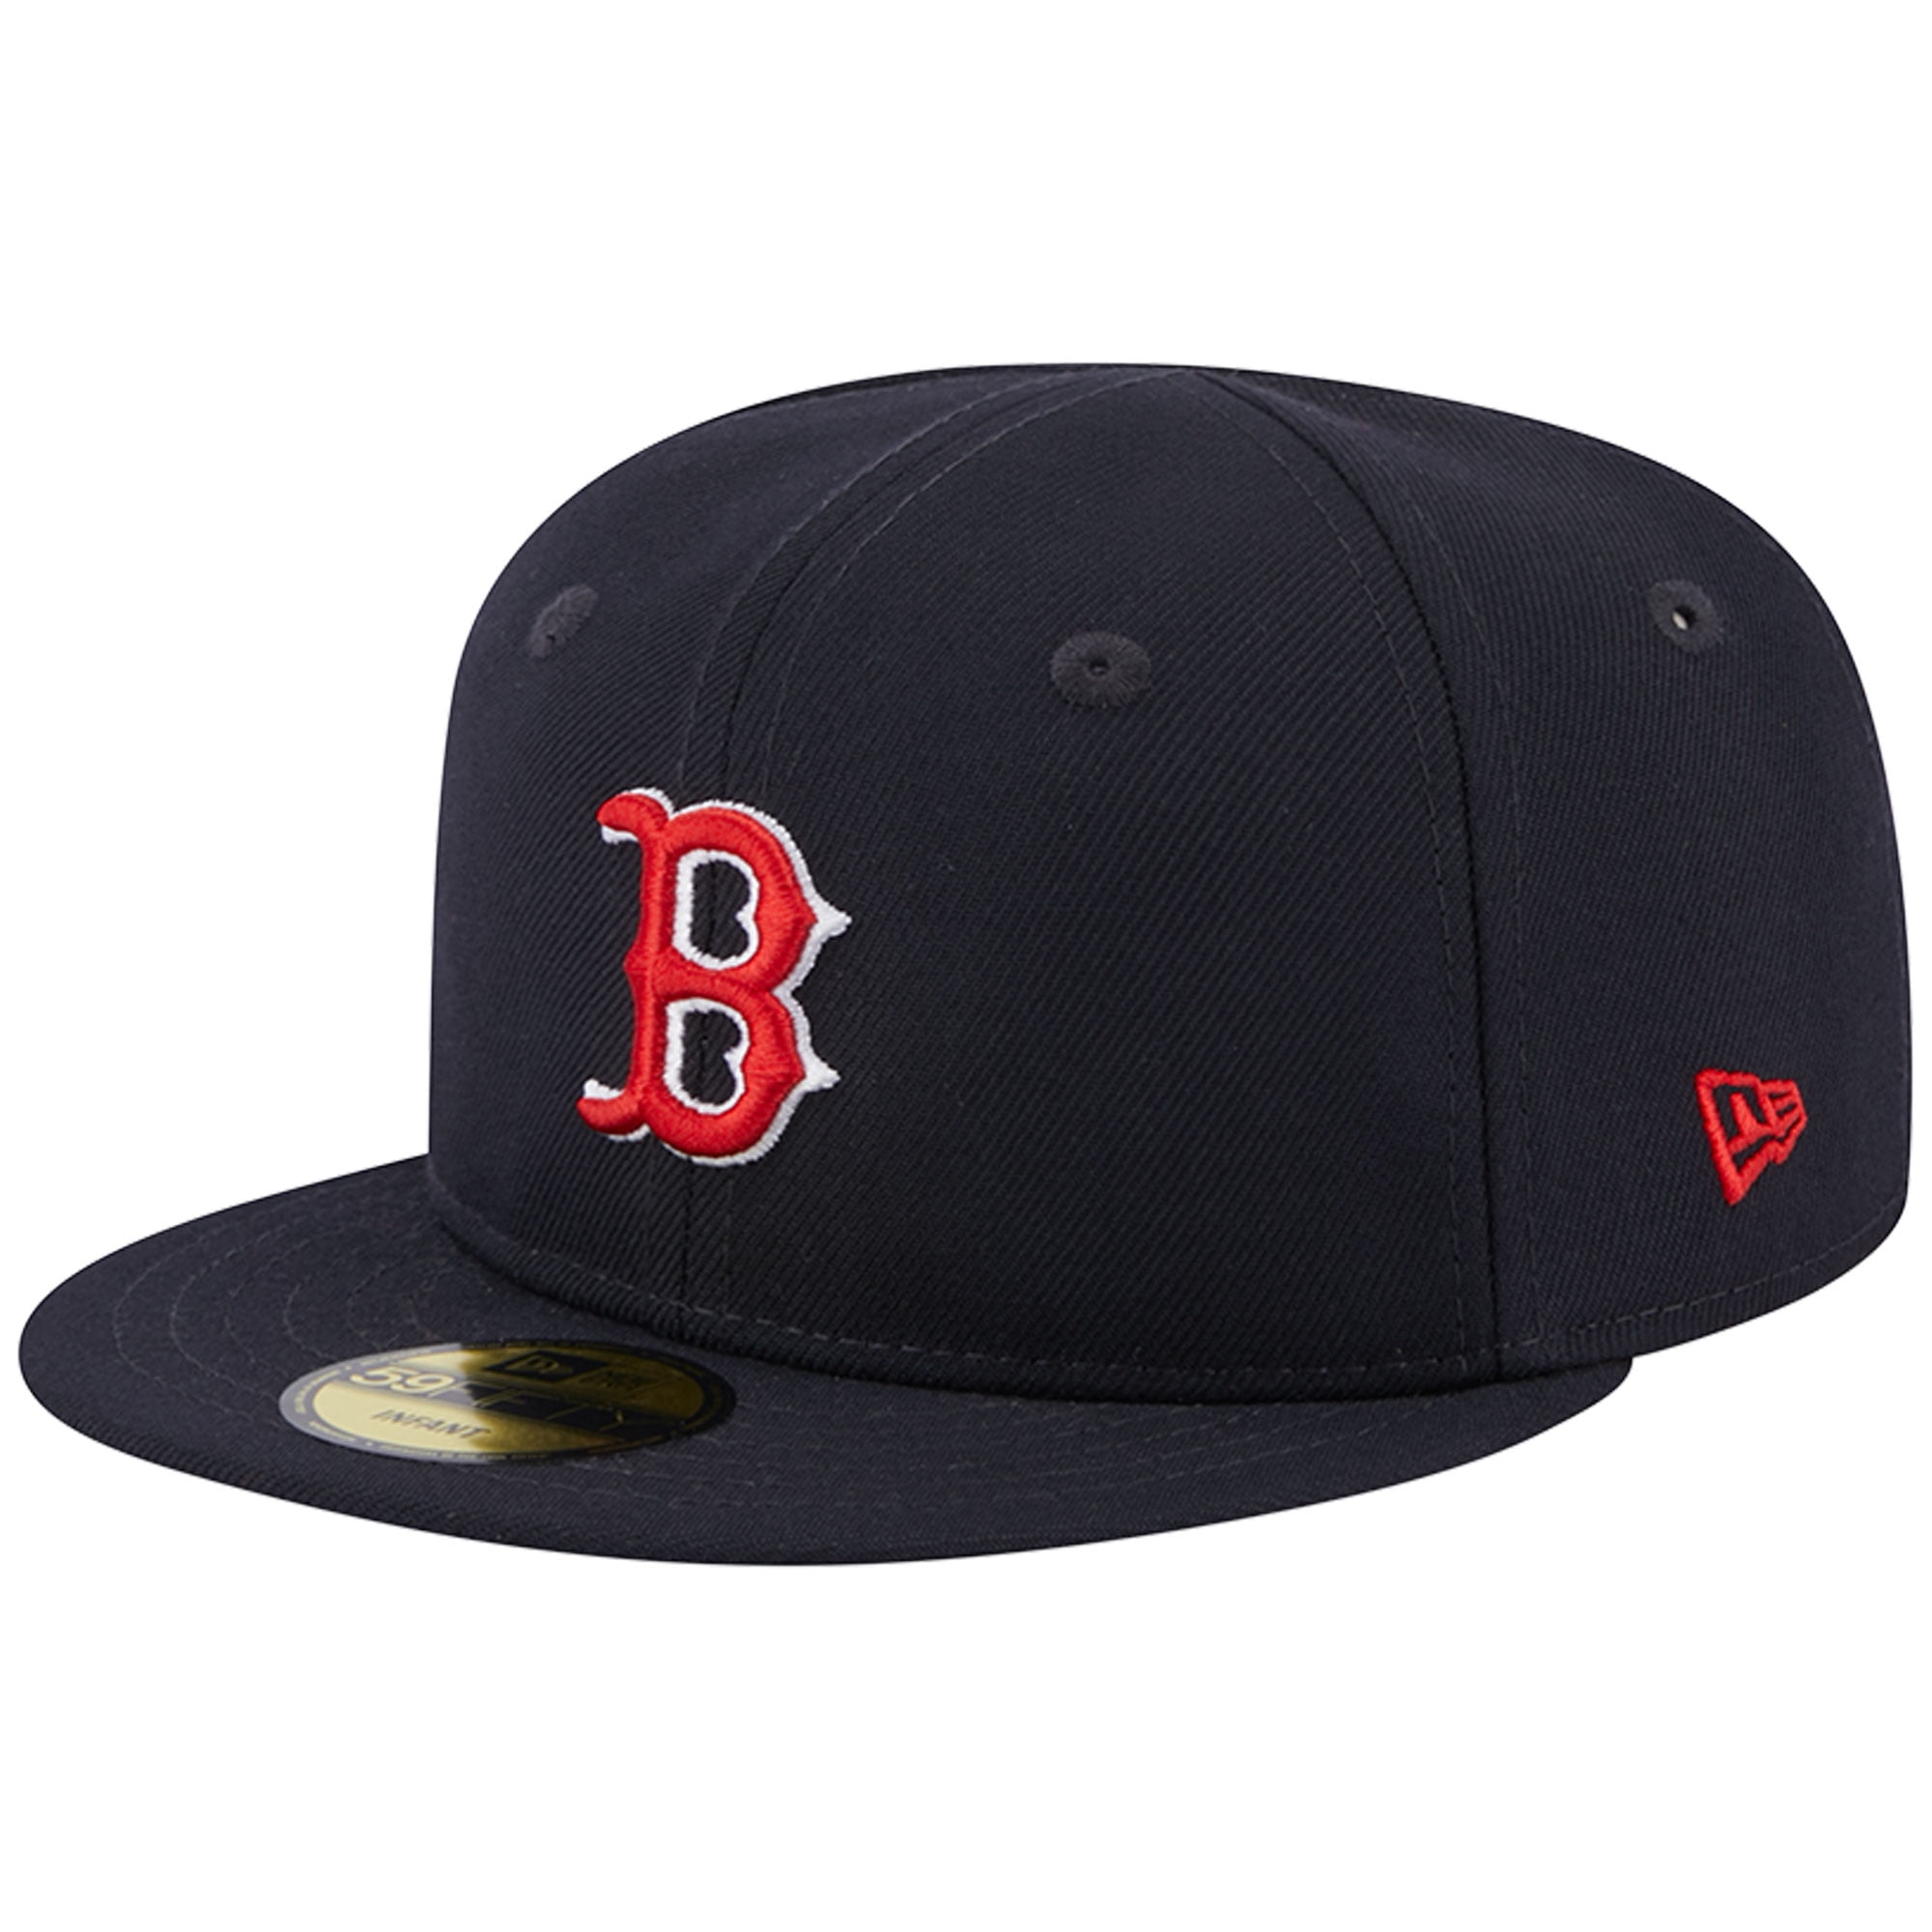  New Era 59Fifty MLB Basic Boston Red Sox Gray Fitted Cap :  Sports Fan Baseball Caps : Sports & Outdoors